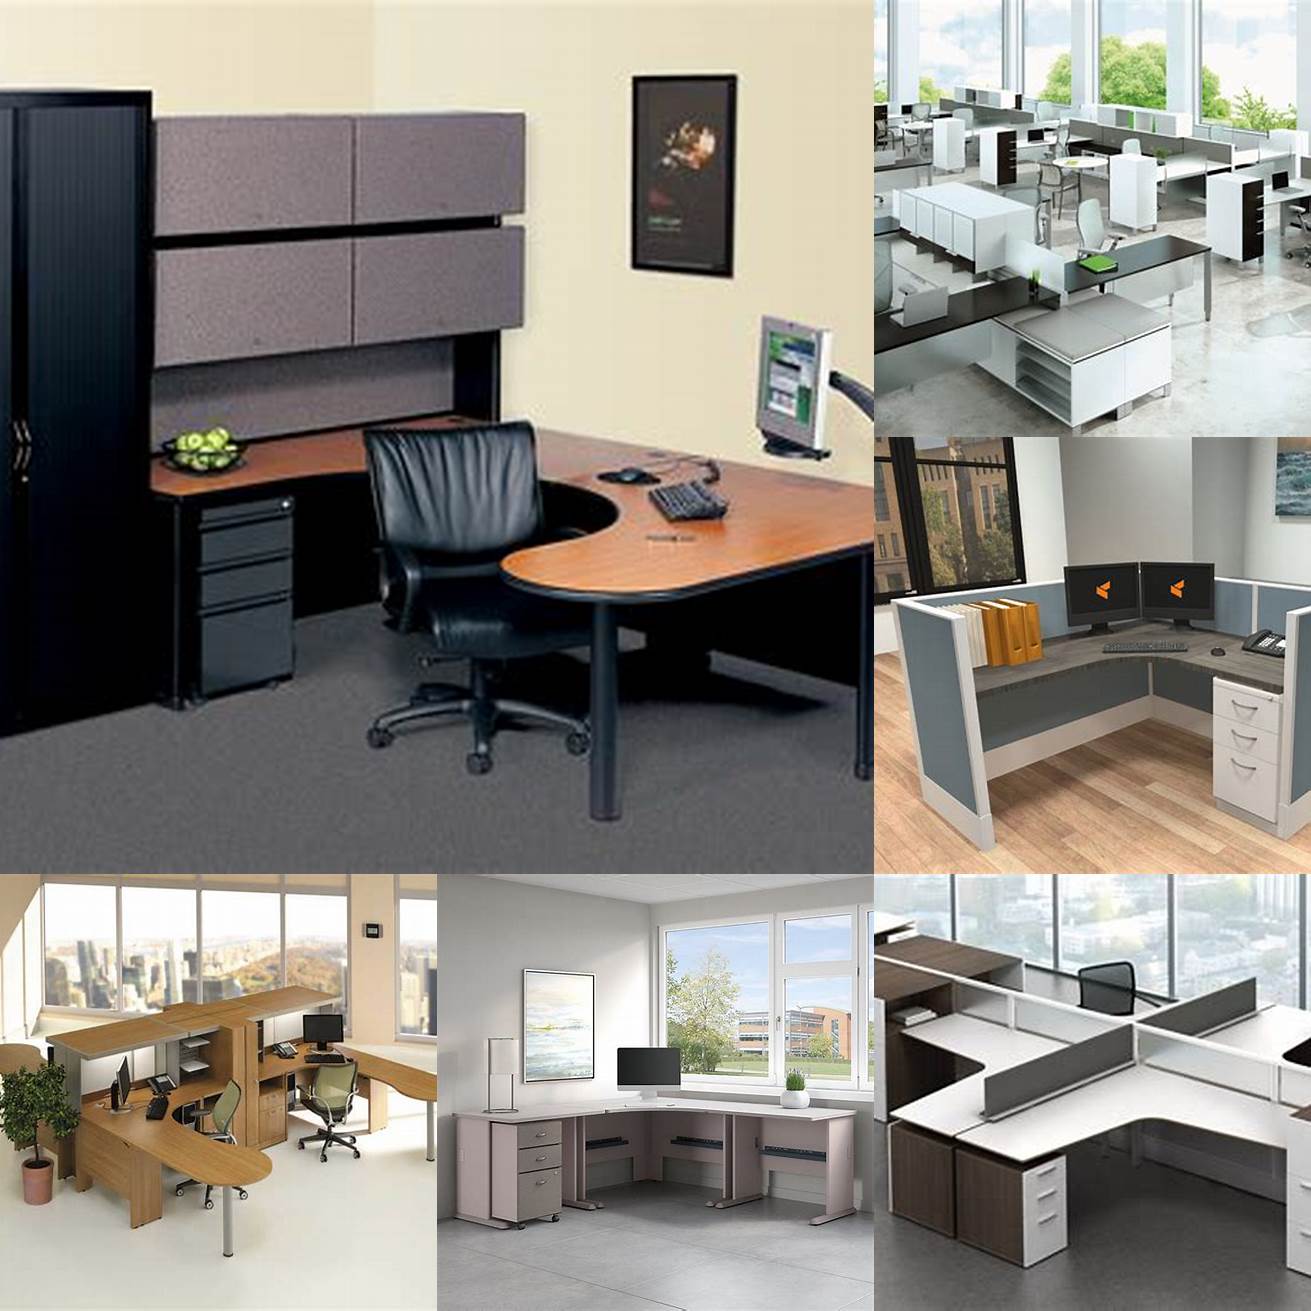 Modular office furniture trends